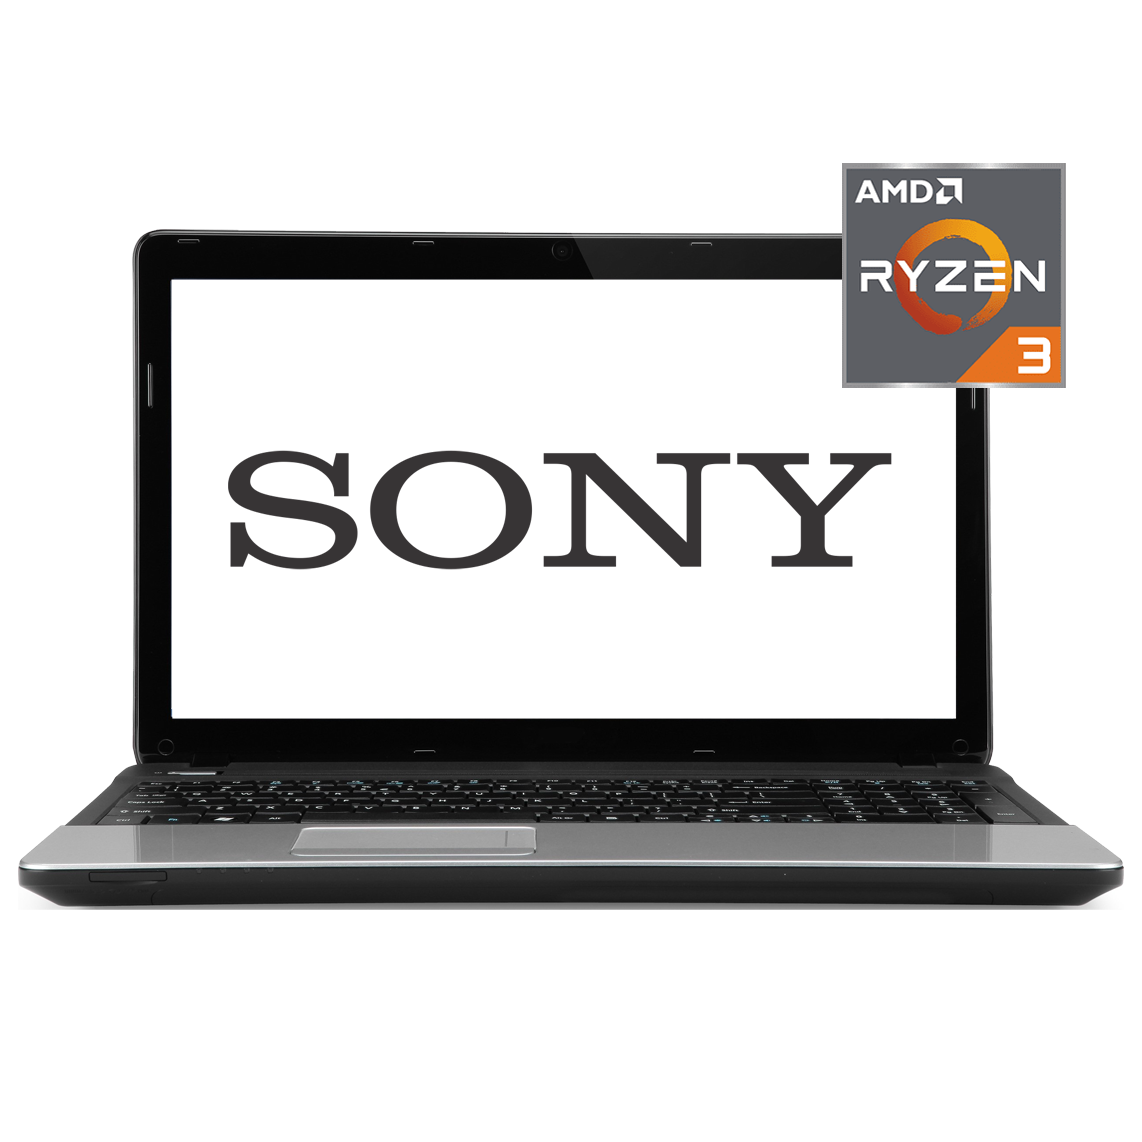 Sony - 14 inch AMD Ryzen 3